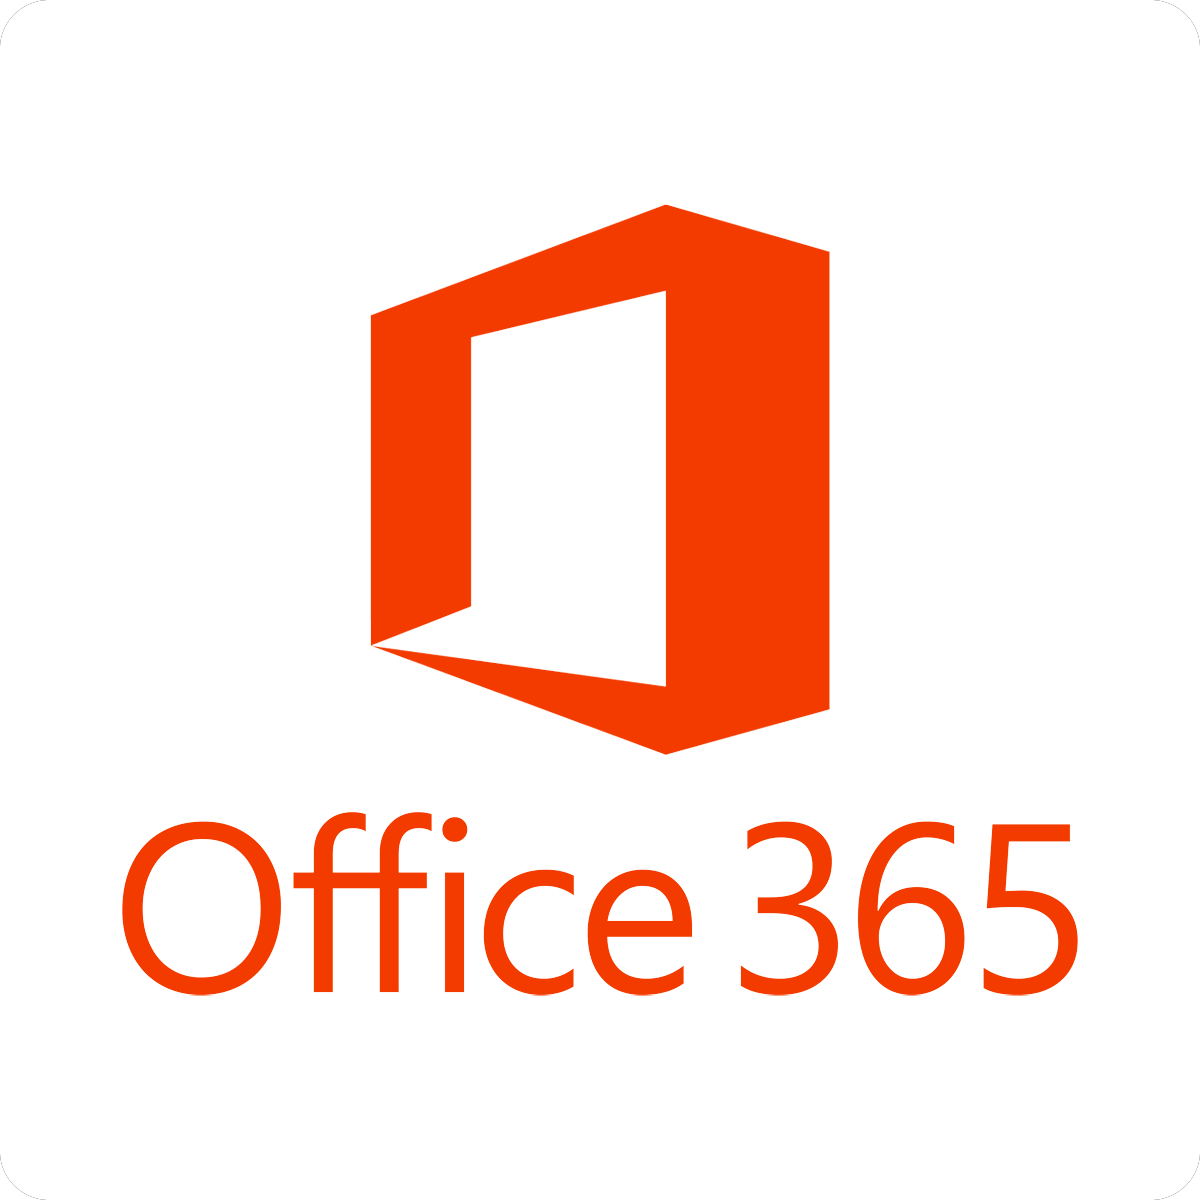 Office 365 - Το Excel δεν έχει αρκετό χώρο στο δίσκο